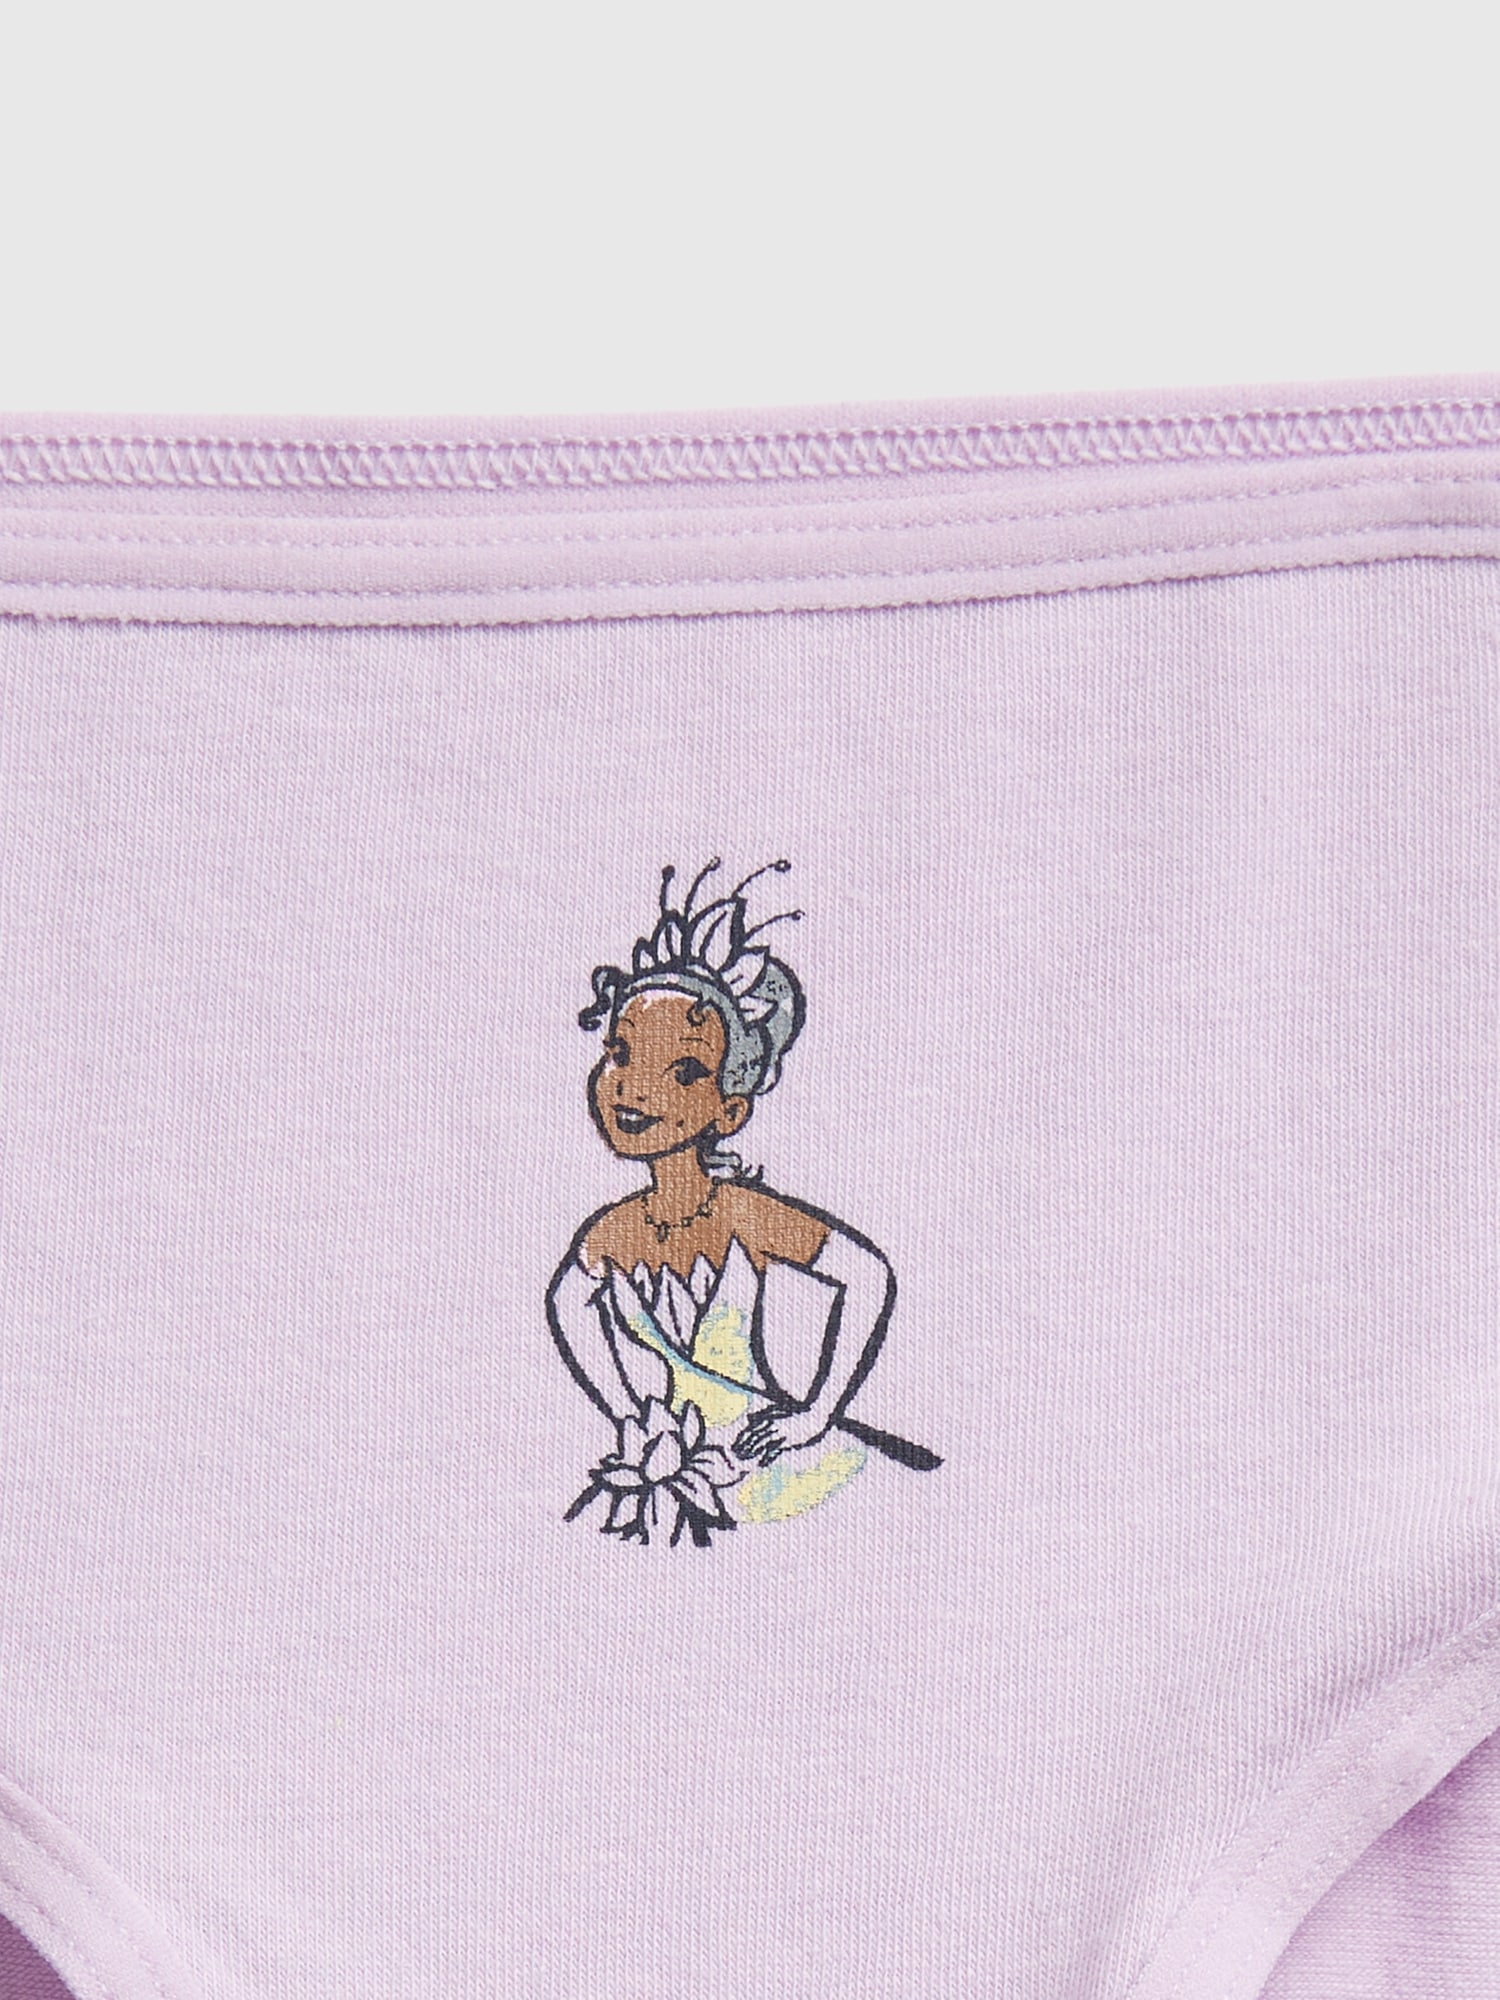 Disney Underpants Women Briefs Panties Cotton Cute Disney Underwear US Size  XS-M